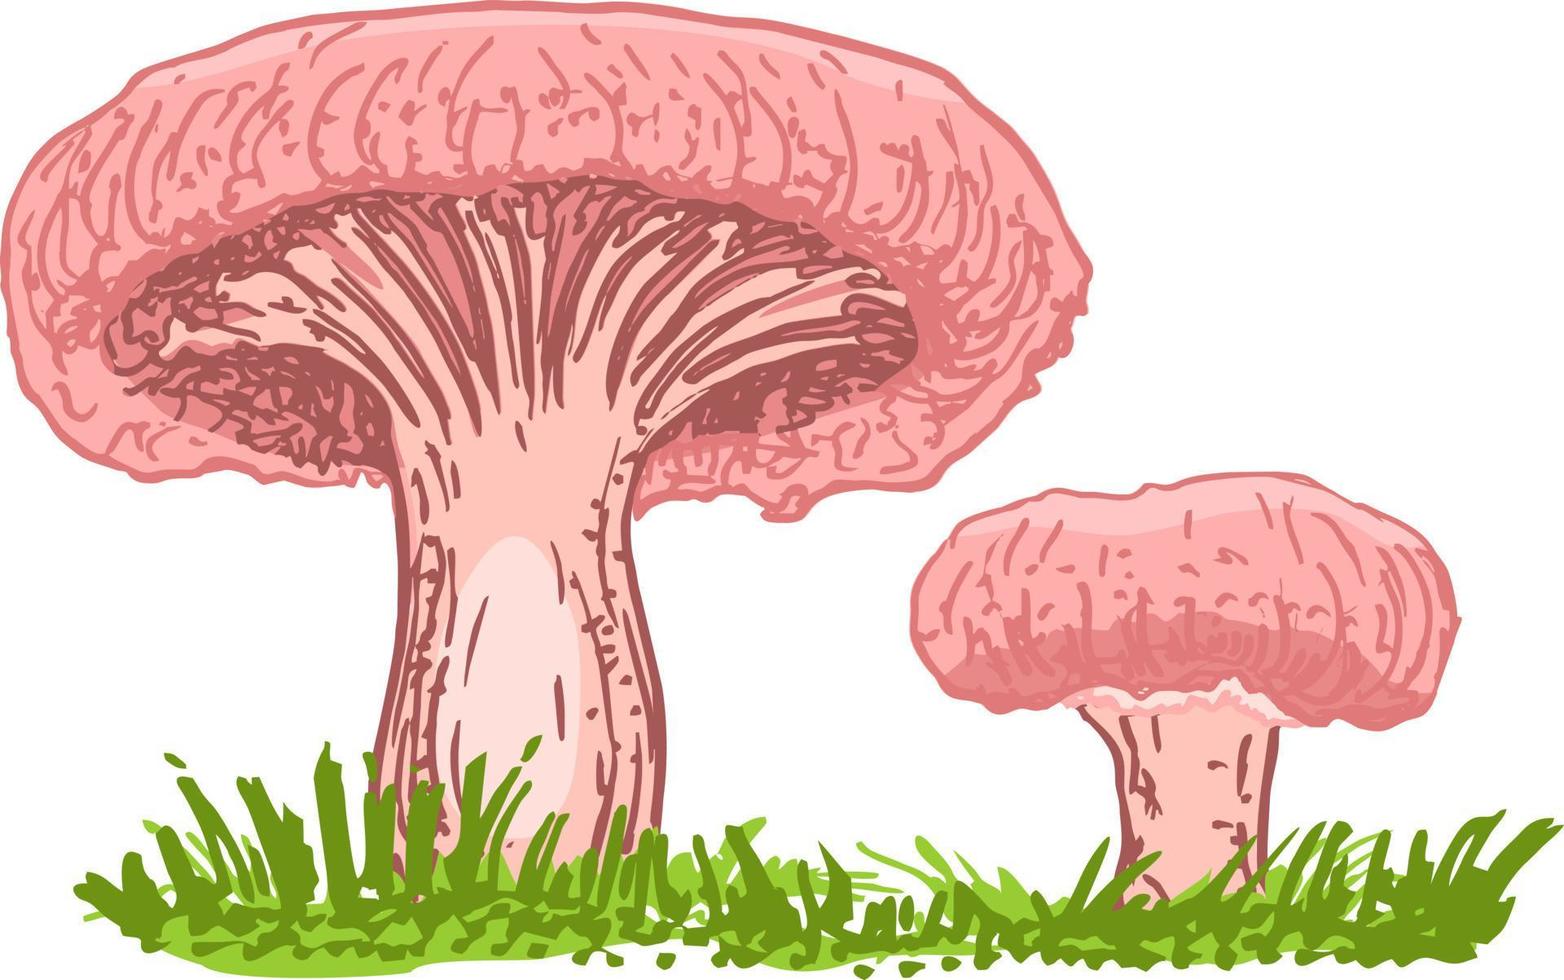 Edible russule mushroom. Coral milky cap mushrooms growing in the forest. Outdoors. Family of mushrooms vector